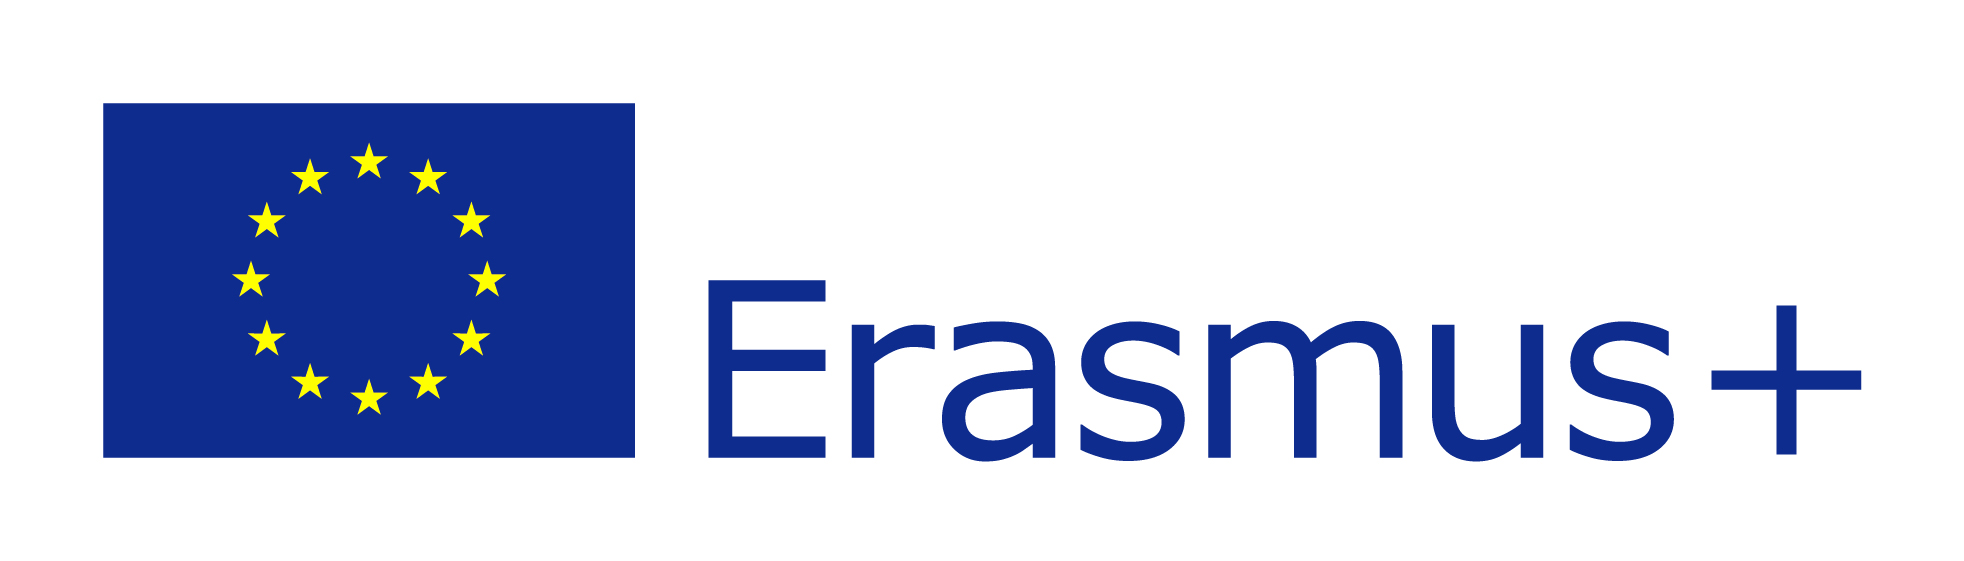 EU flag-Erasmus_vect_POS